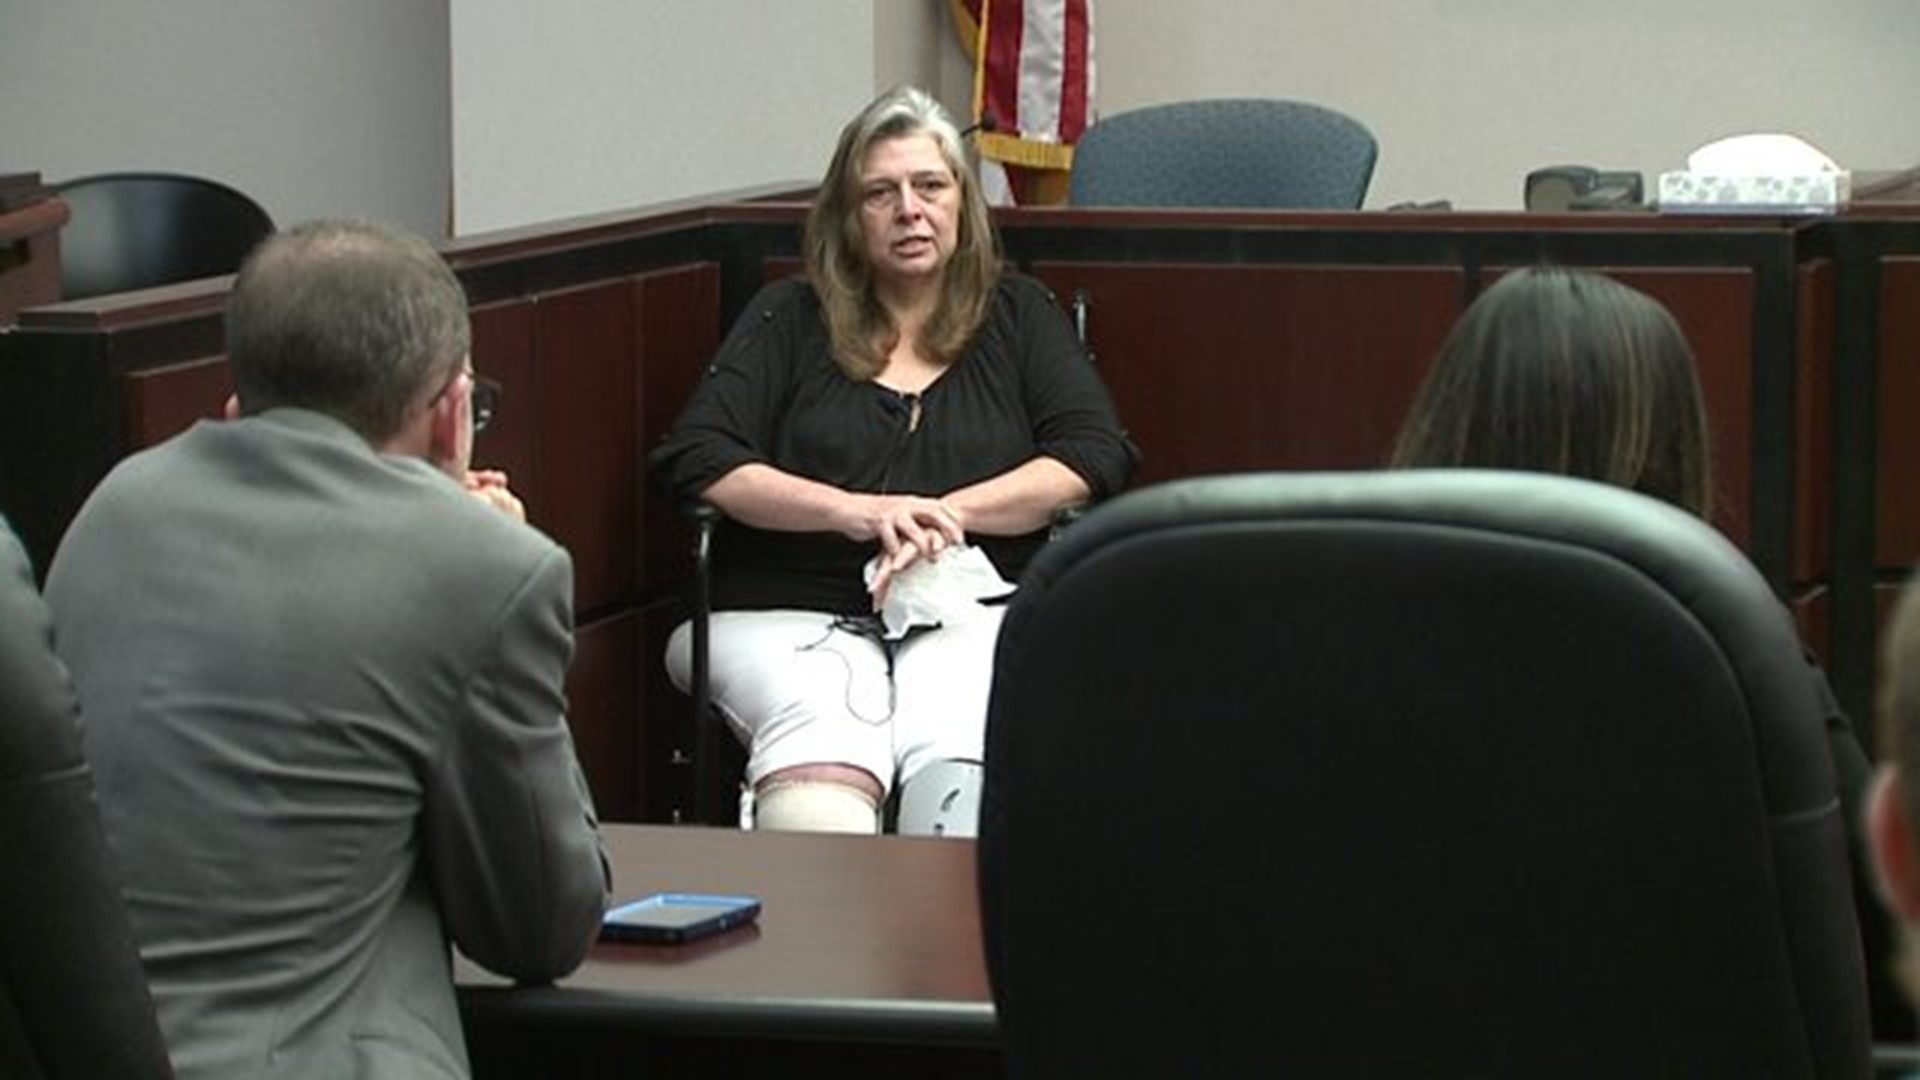 Victim addresses drunk driver in court